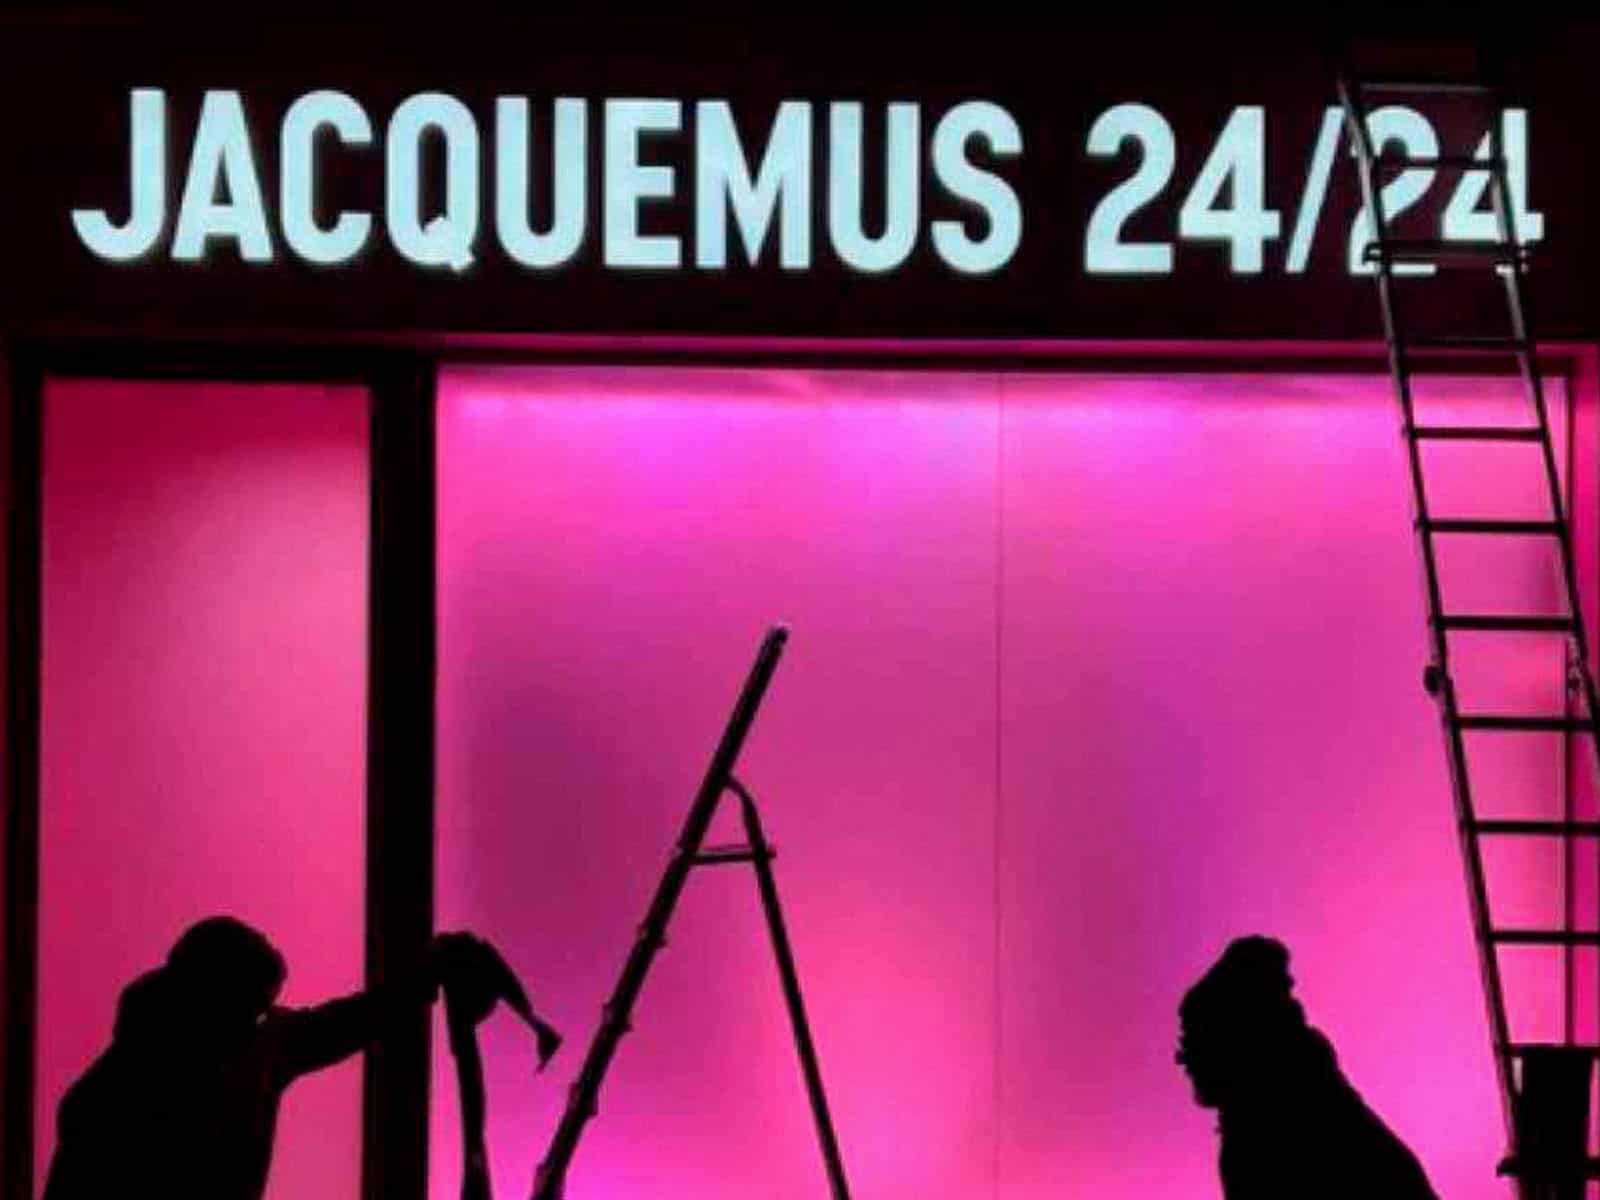 Jacquemus’ 24/24 pop-up arrives in Milan